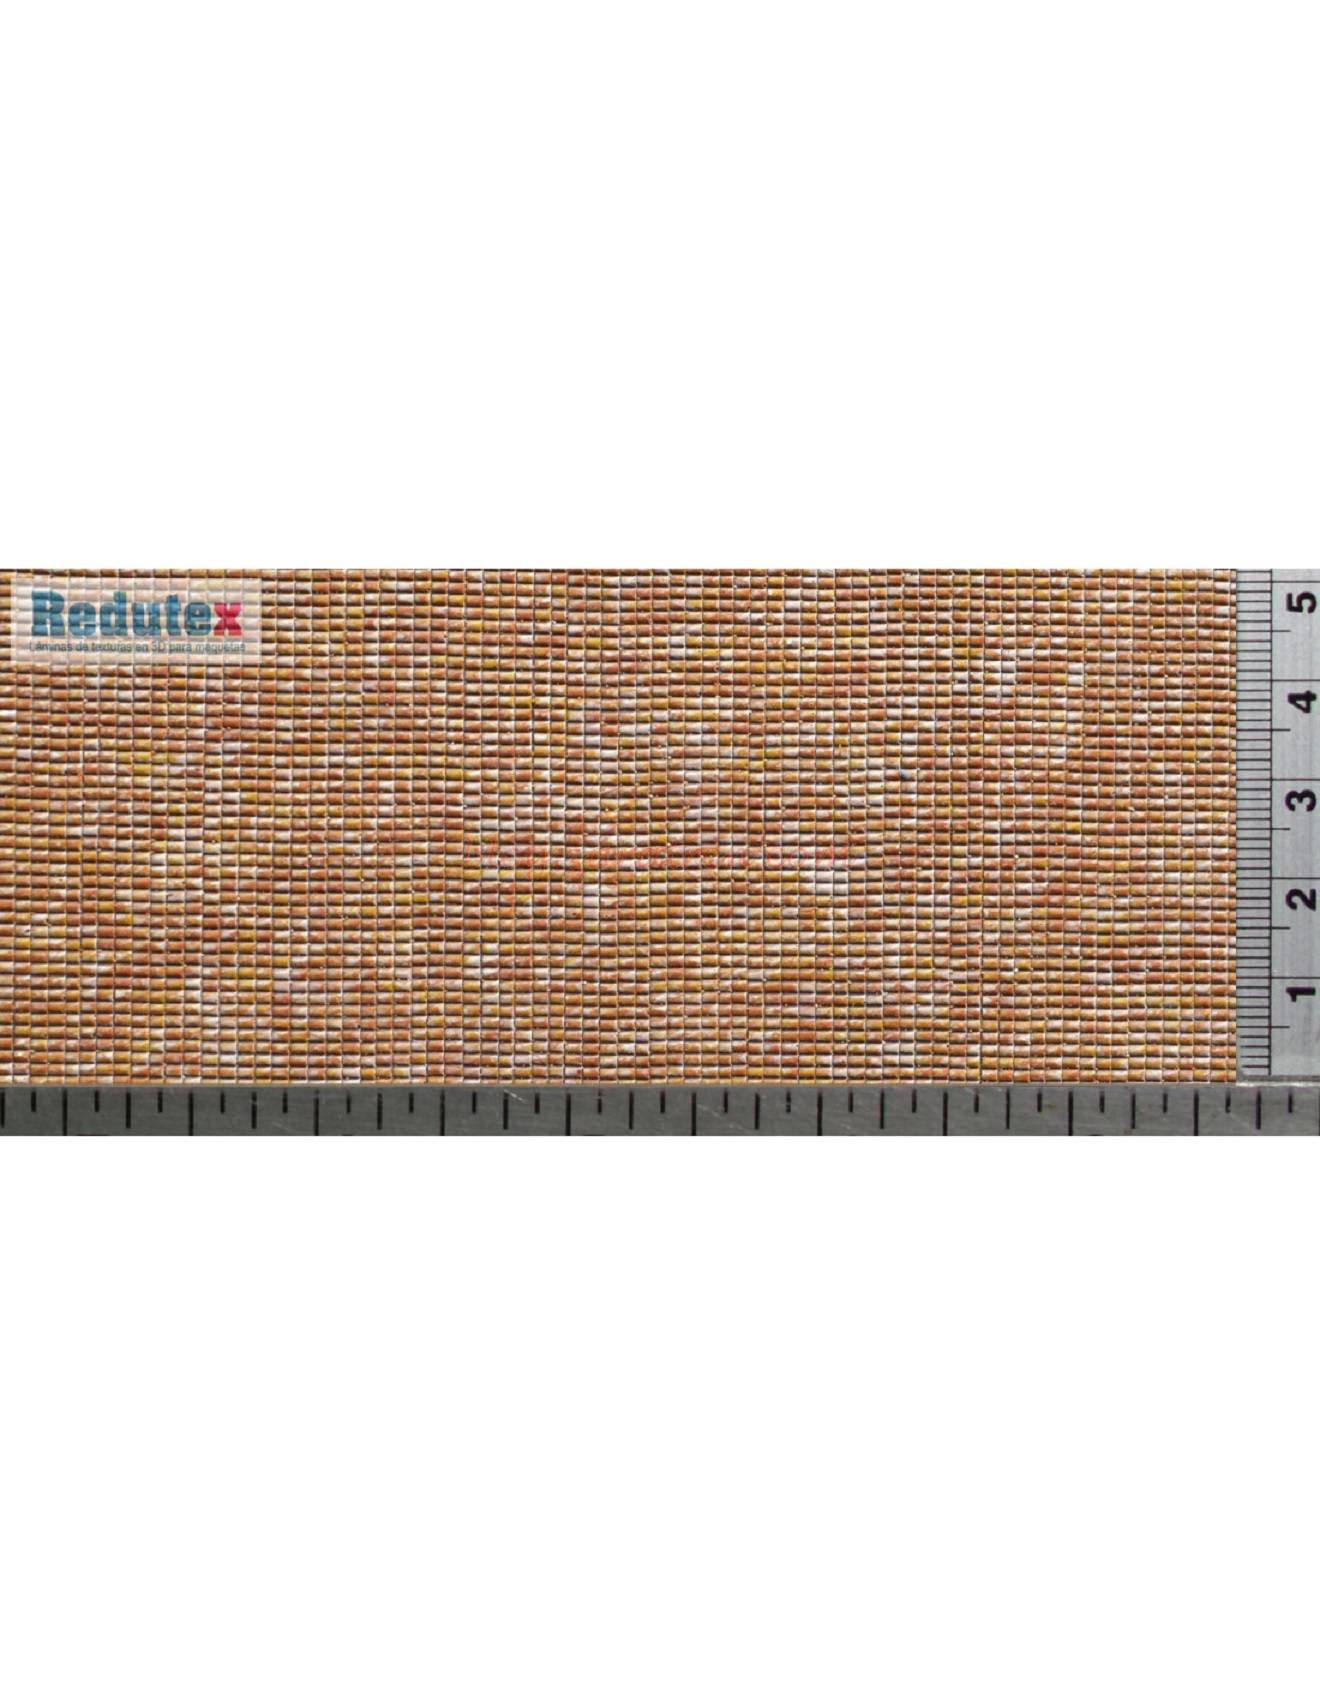 Redutex – Teja de Tubo Terracota ( Policromado ) , Ref: 160TT122, acabado natural.